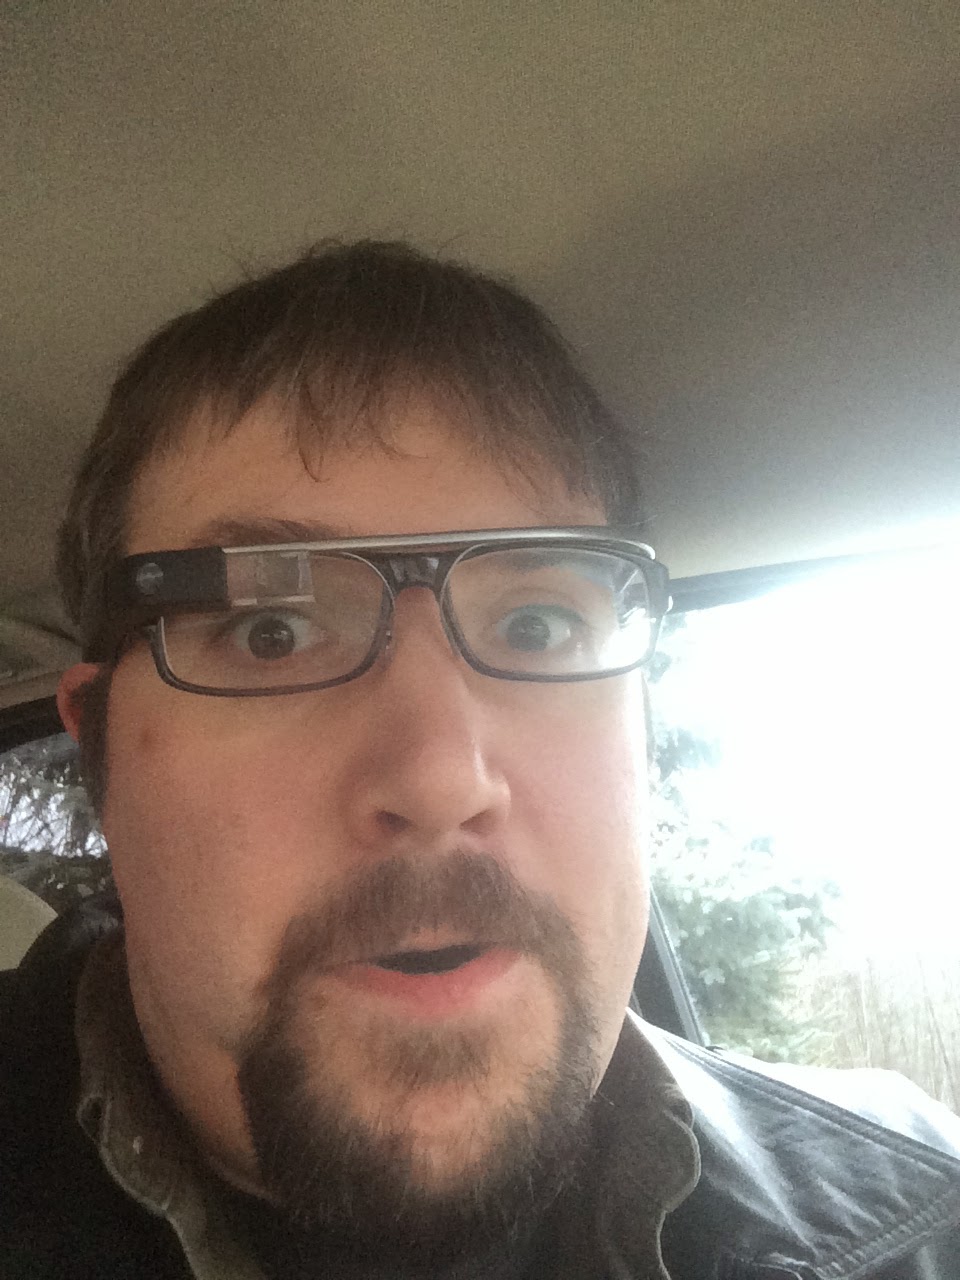 Wearing Google Glass